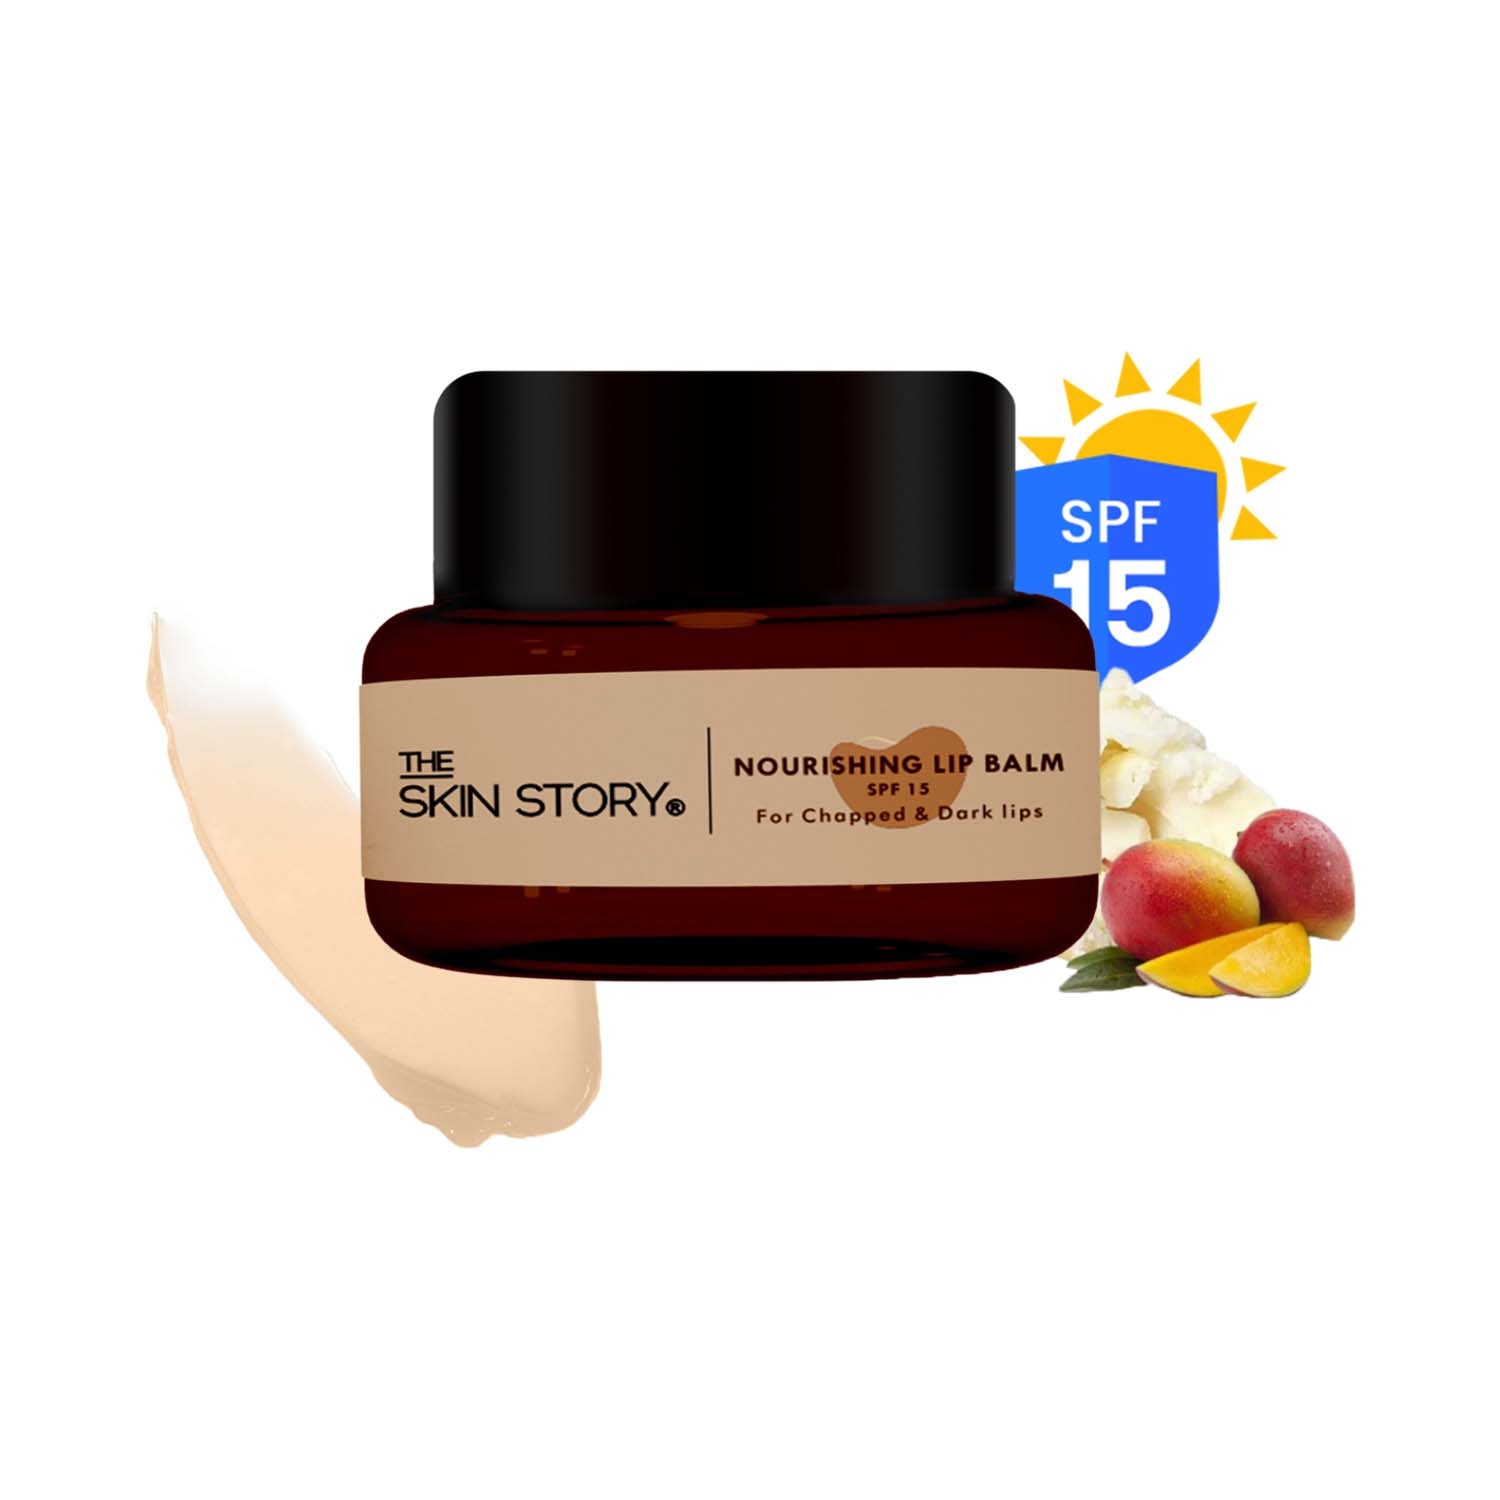 The Skin Story | The Skin Story Nourishing Lip Balm SPF 15 (25g)